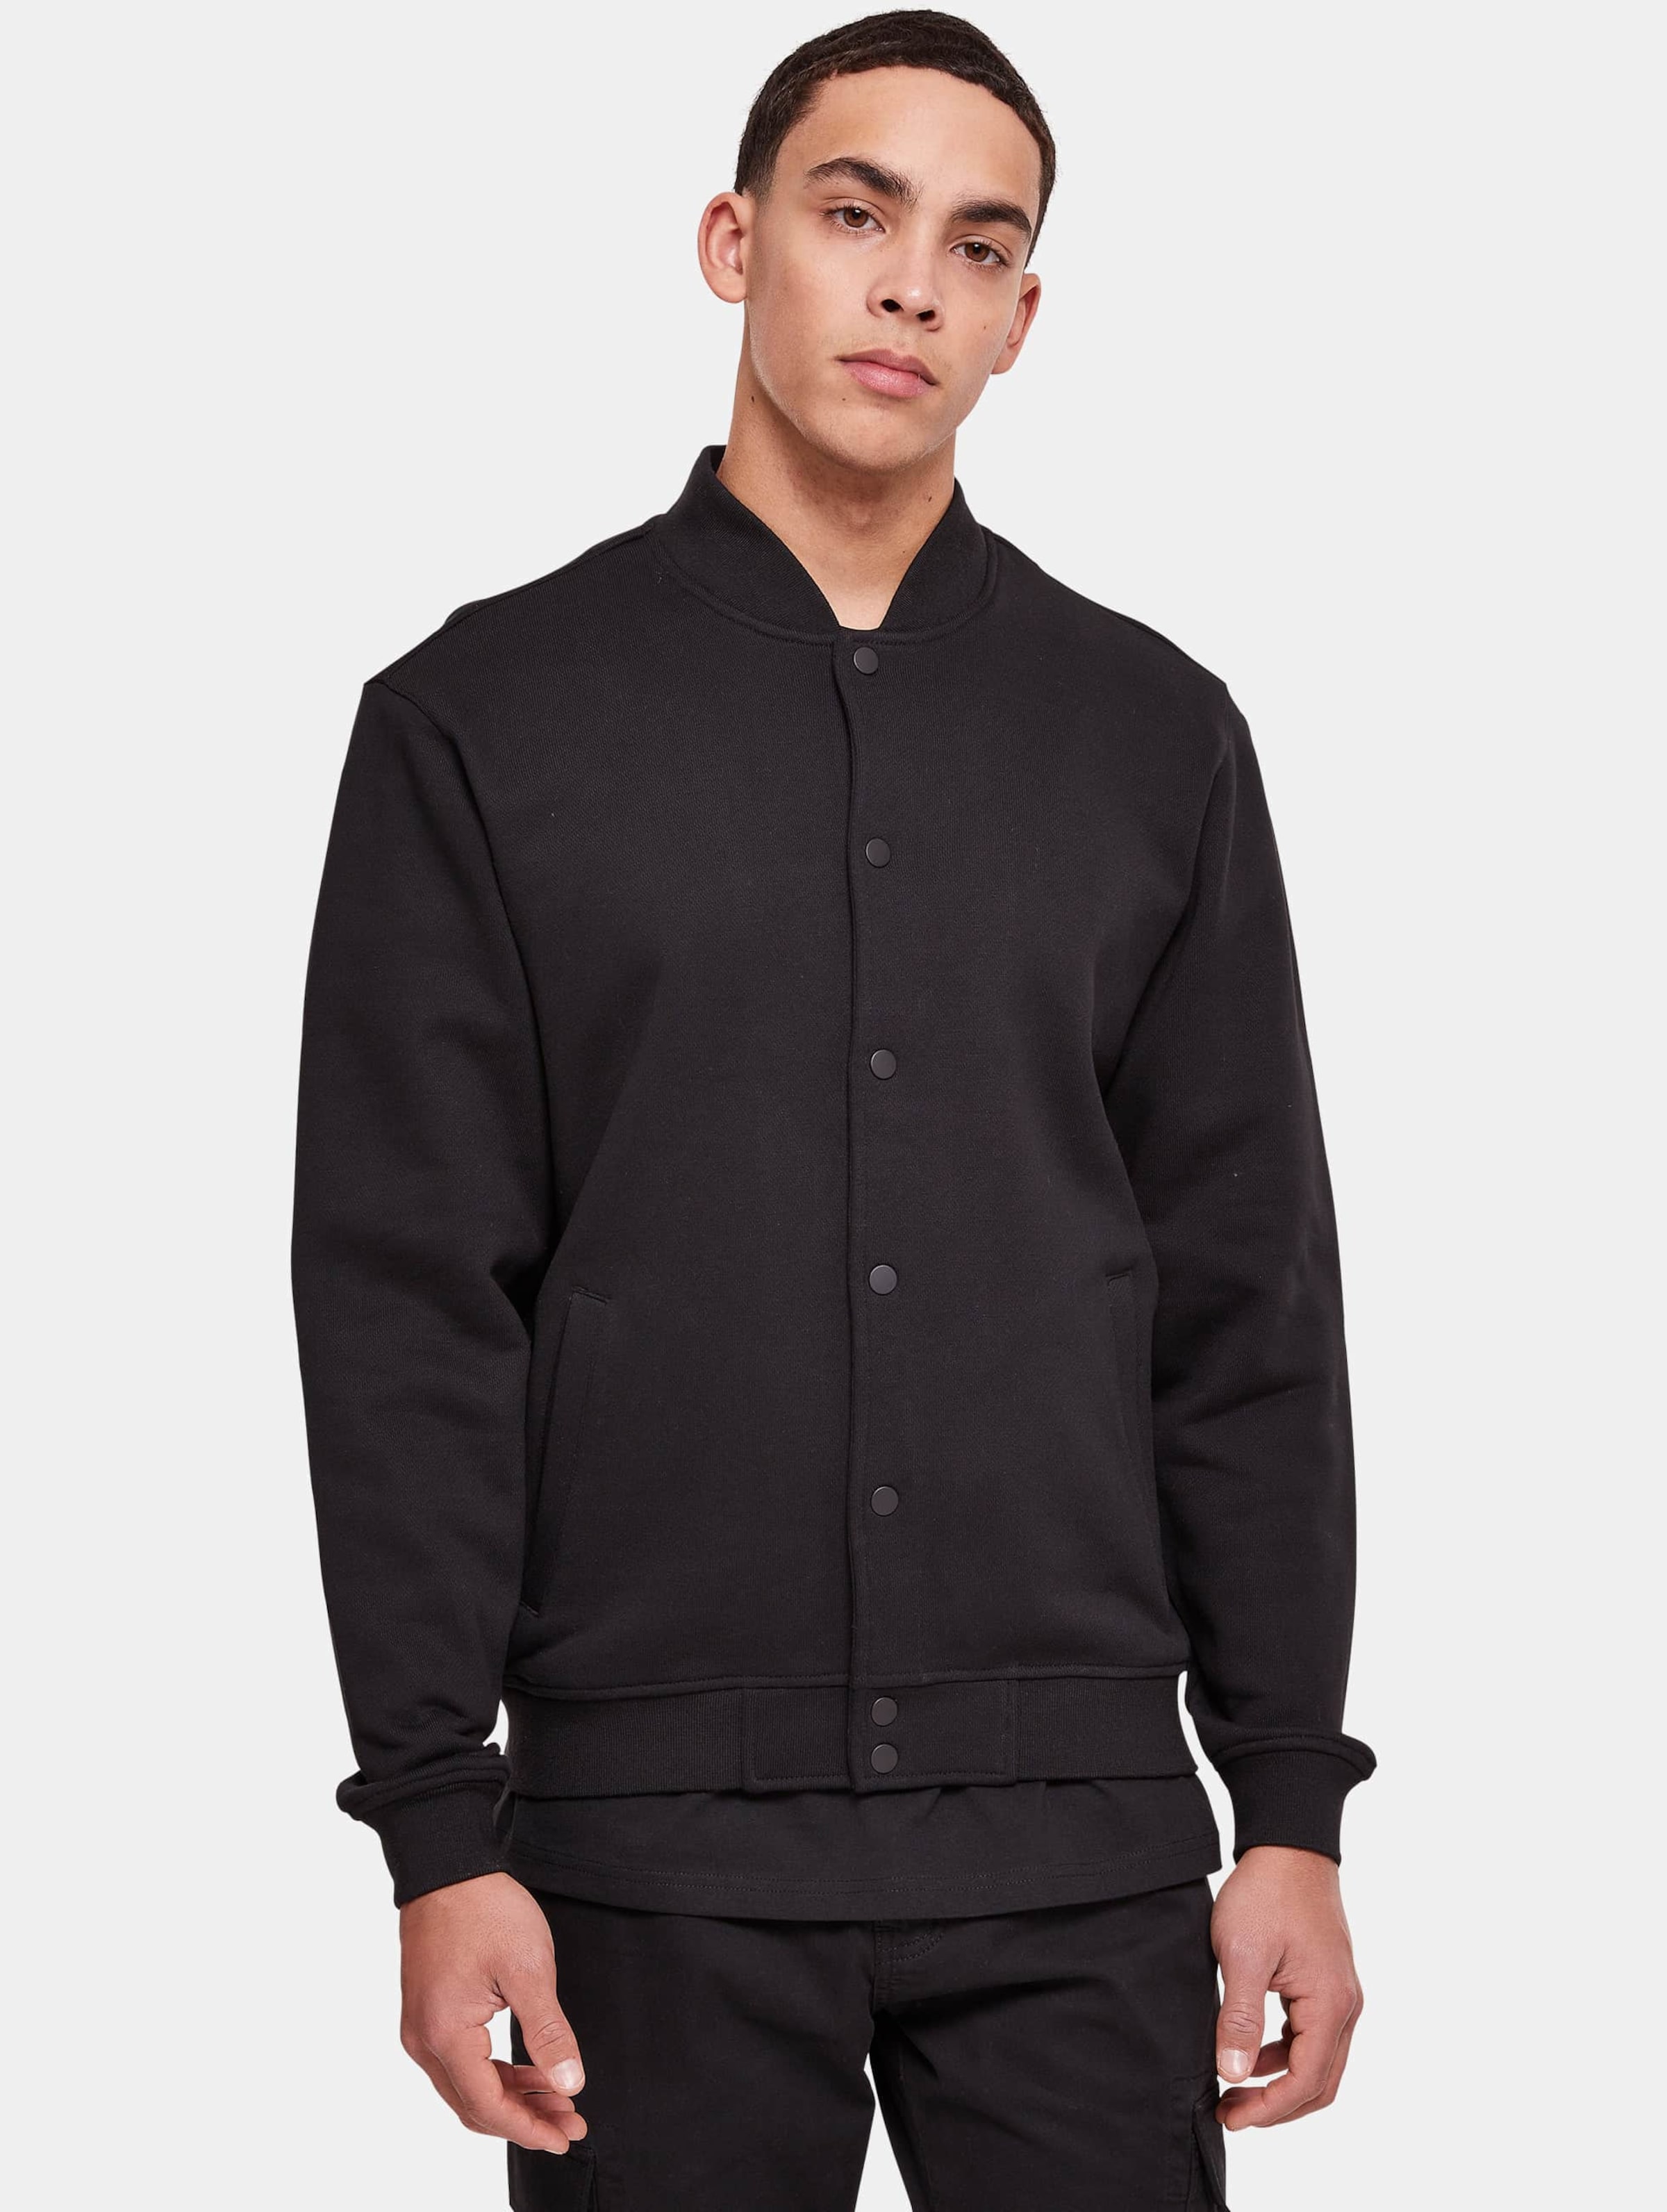 Urban Classics - Ultra Heavy Solid College jacket - 5XL - Zwart